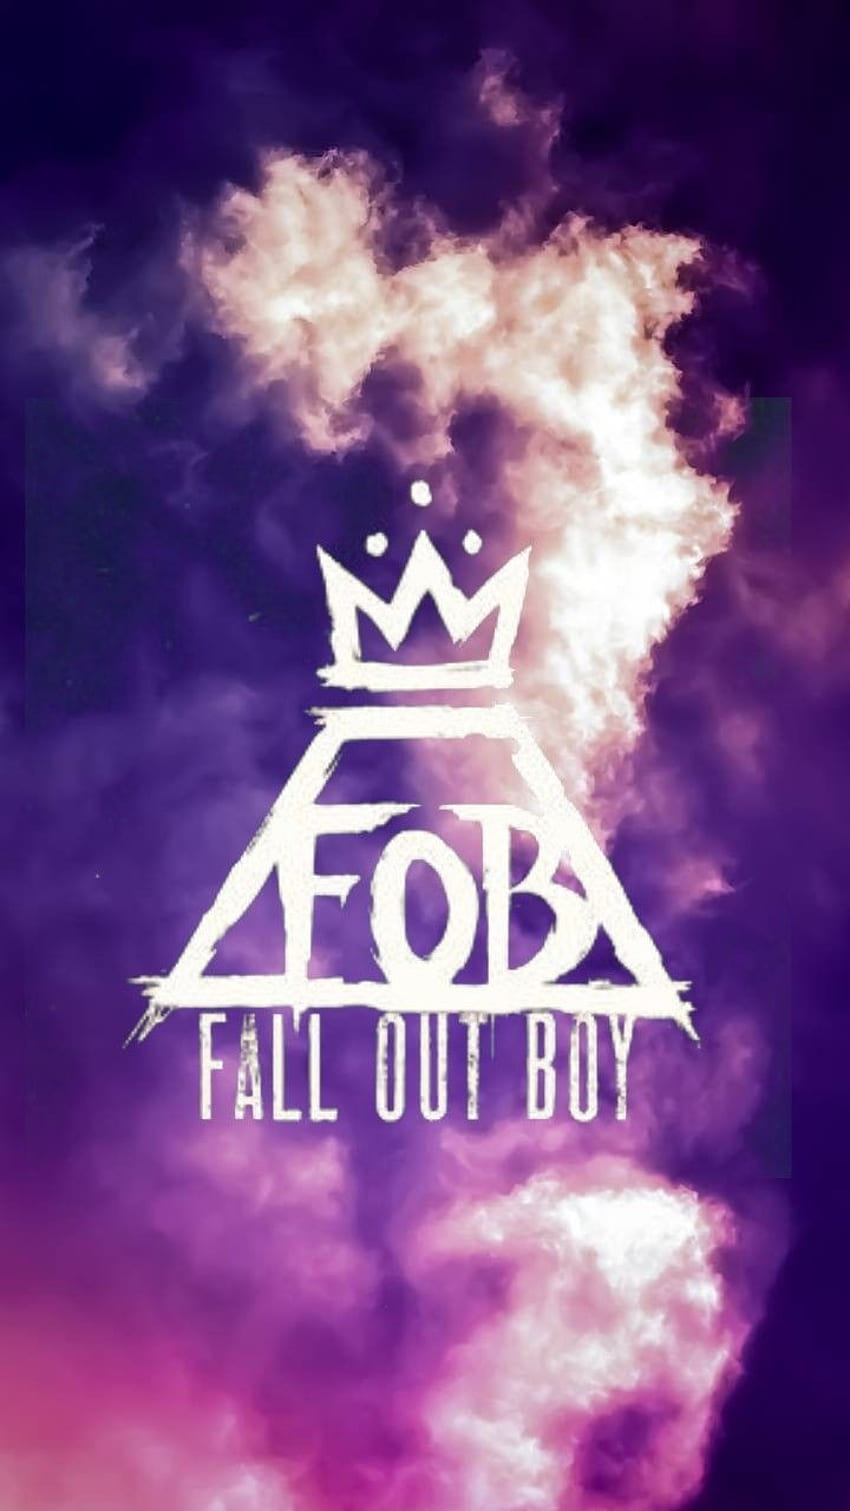 Wyluzuj chłopie. Fall out boy, Fall out boy, Boys, Red Band Society Tapeta na telefon HD